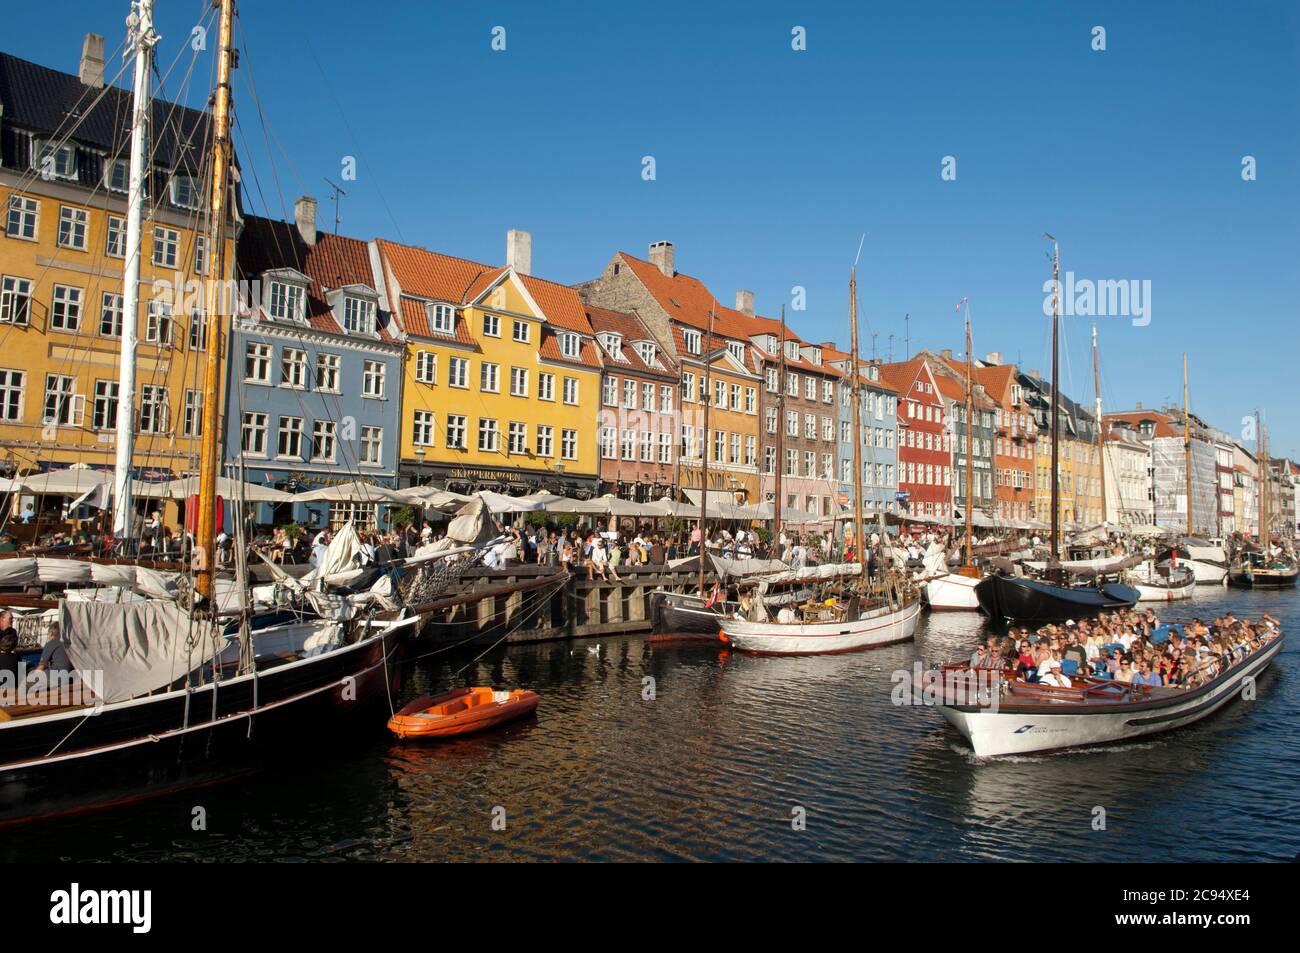 Turista godendo di un tour del Nyhavn in barca Copenhagen, Zelanda, Danimarca, Europa. Foto Stock